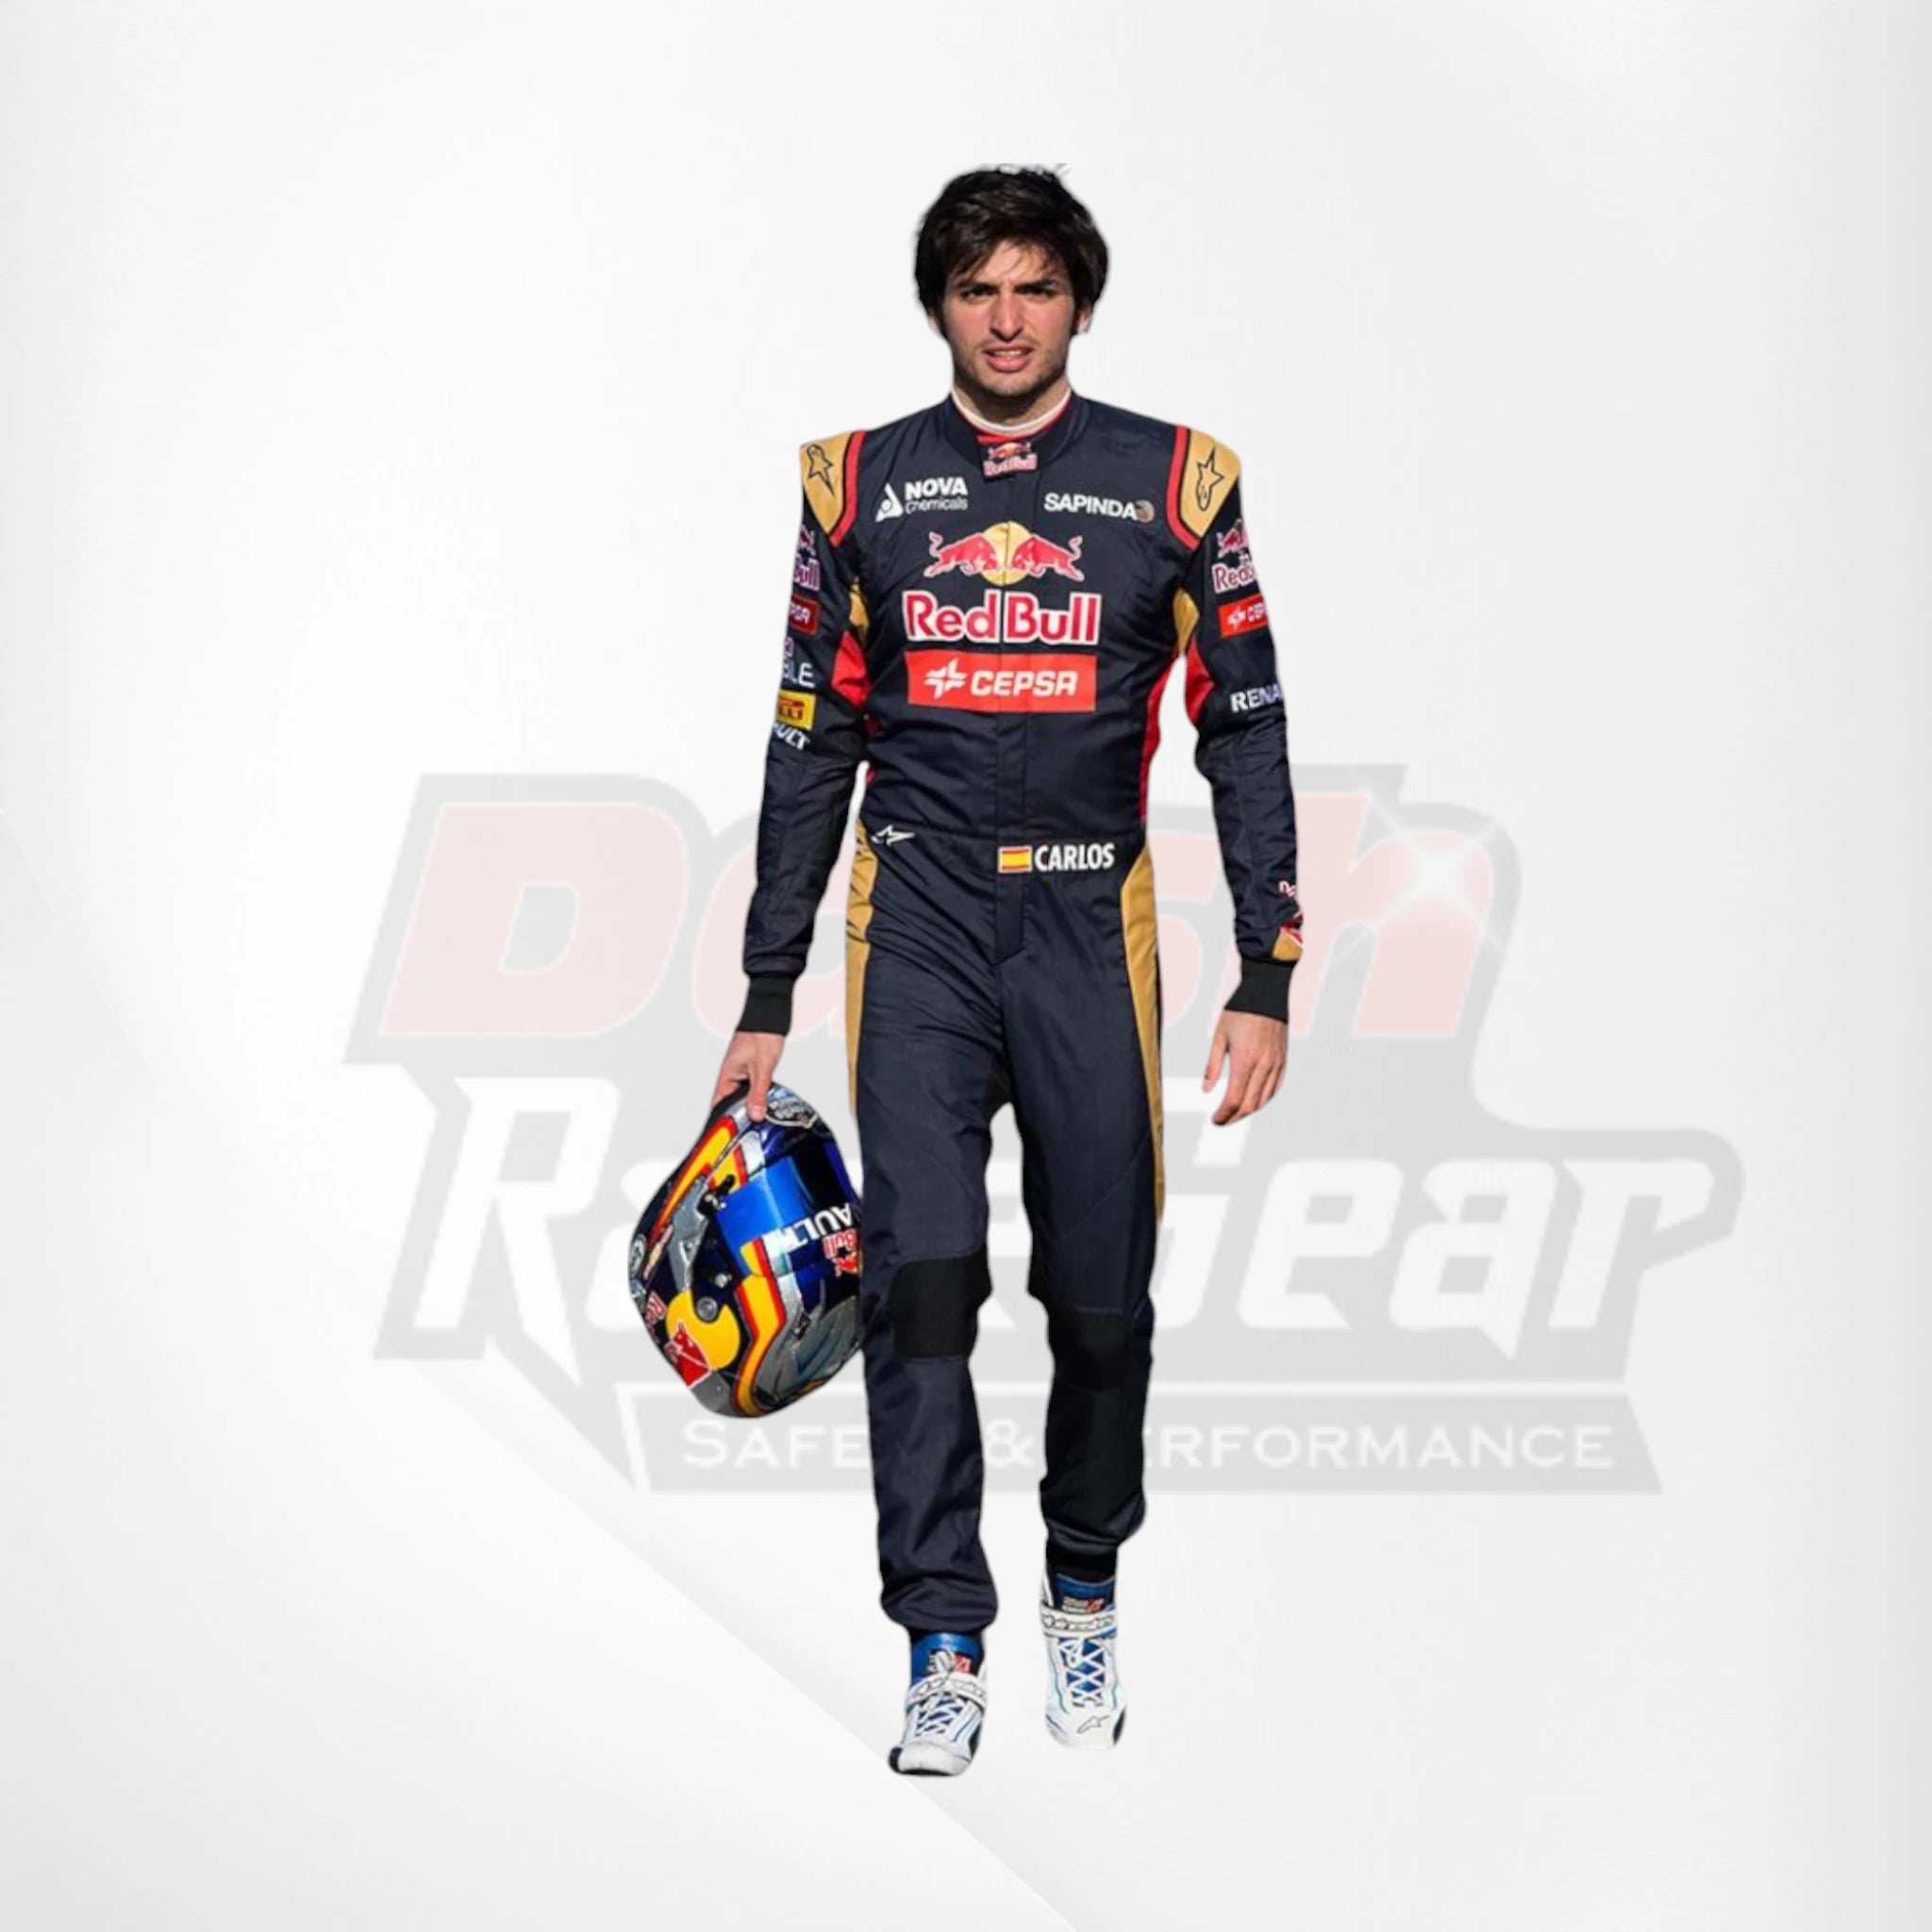 2015 Red Bull Carlos Sainz F1  Race Suit - Toro Rosso